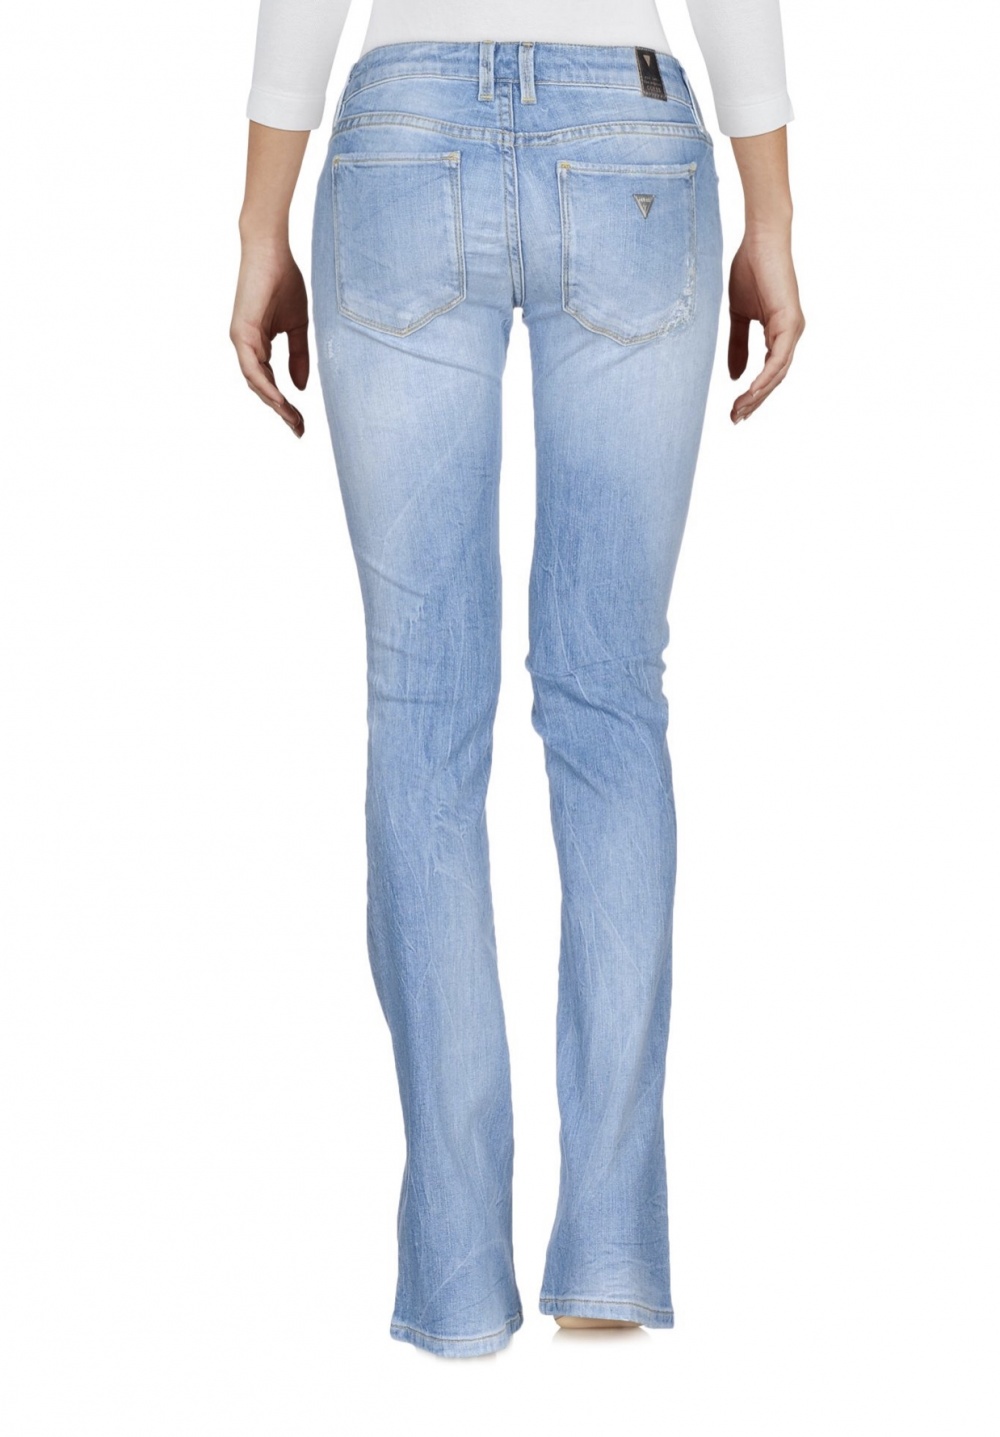 Новые джинсы Guess размер 26